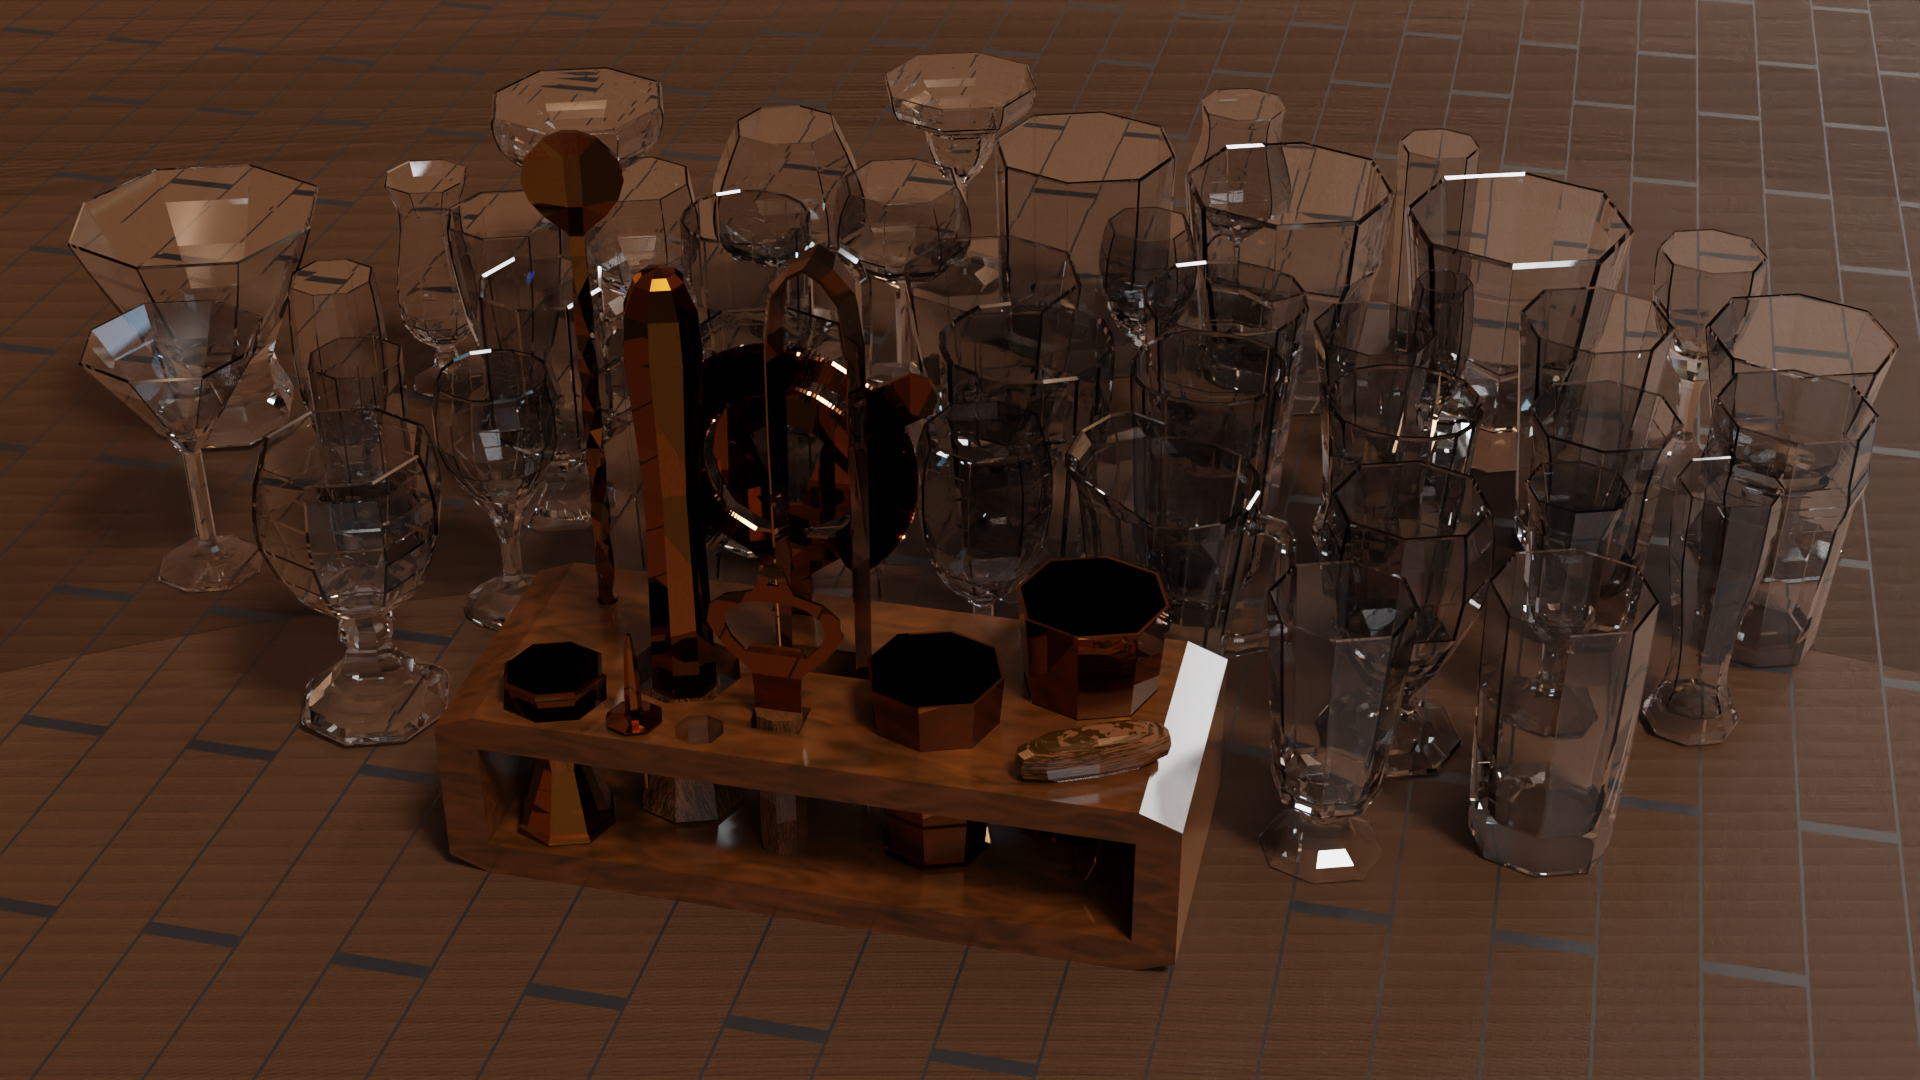 Mixology Set: Tools and Glassware